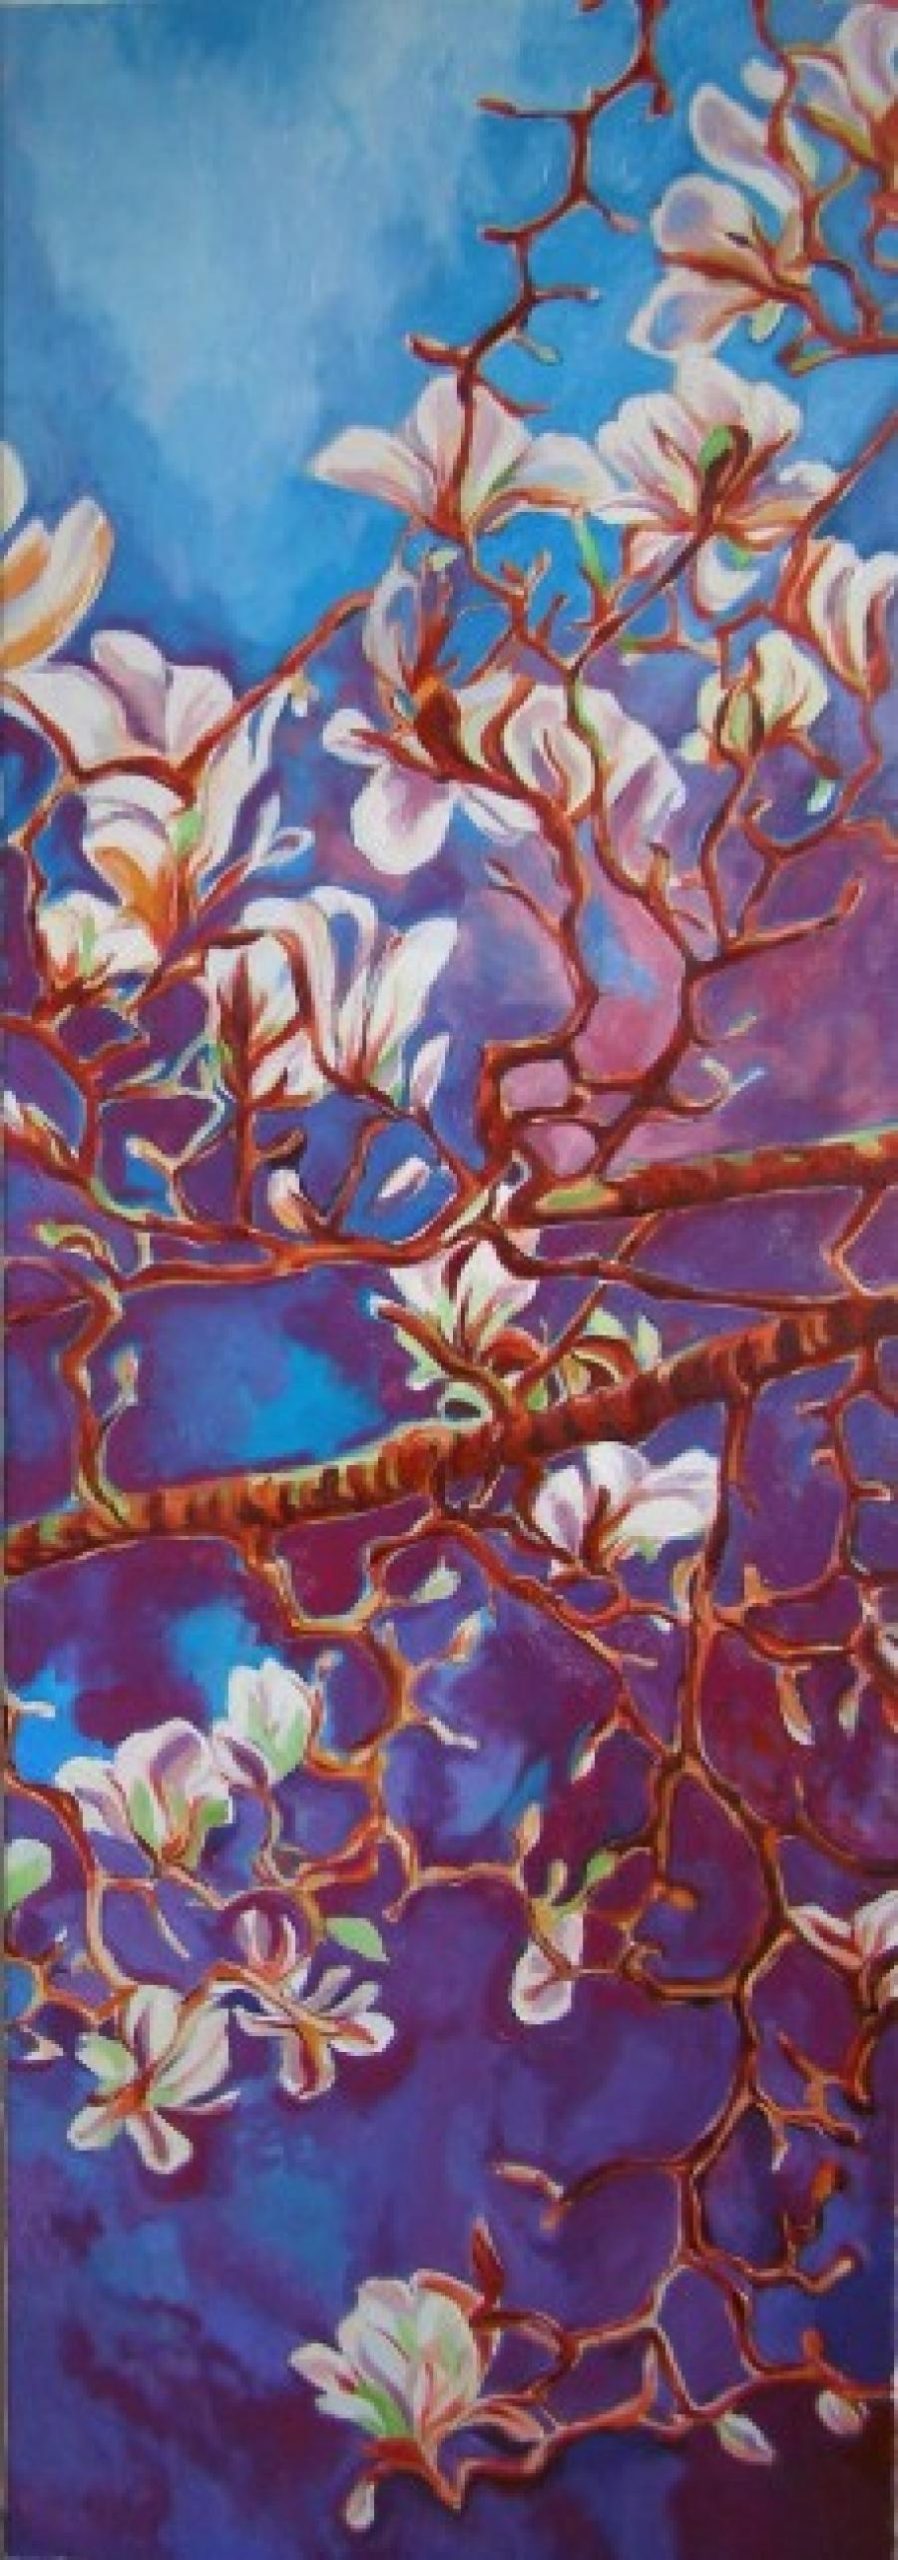 Kunst: Magnolia in paars van kunstenaar Sanneke S.I. Griepink